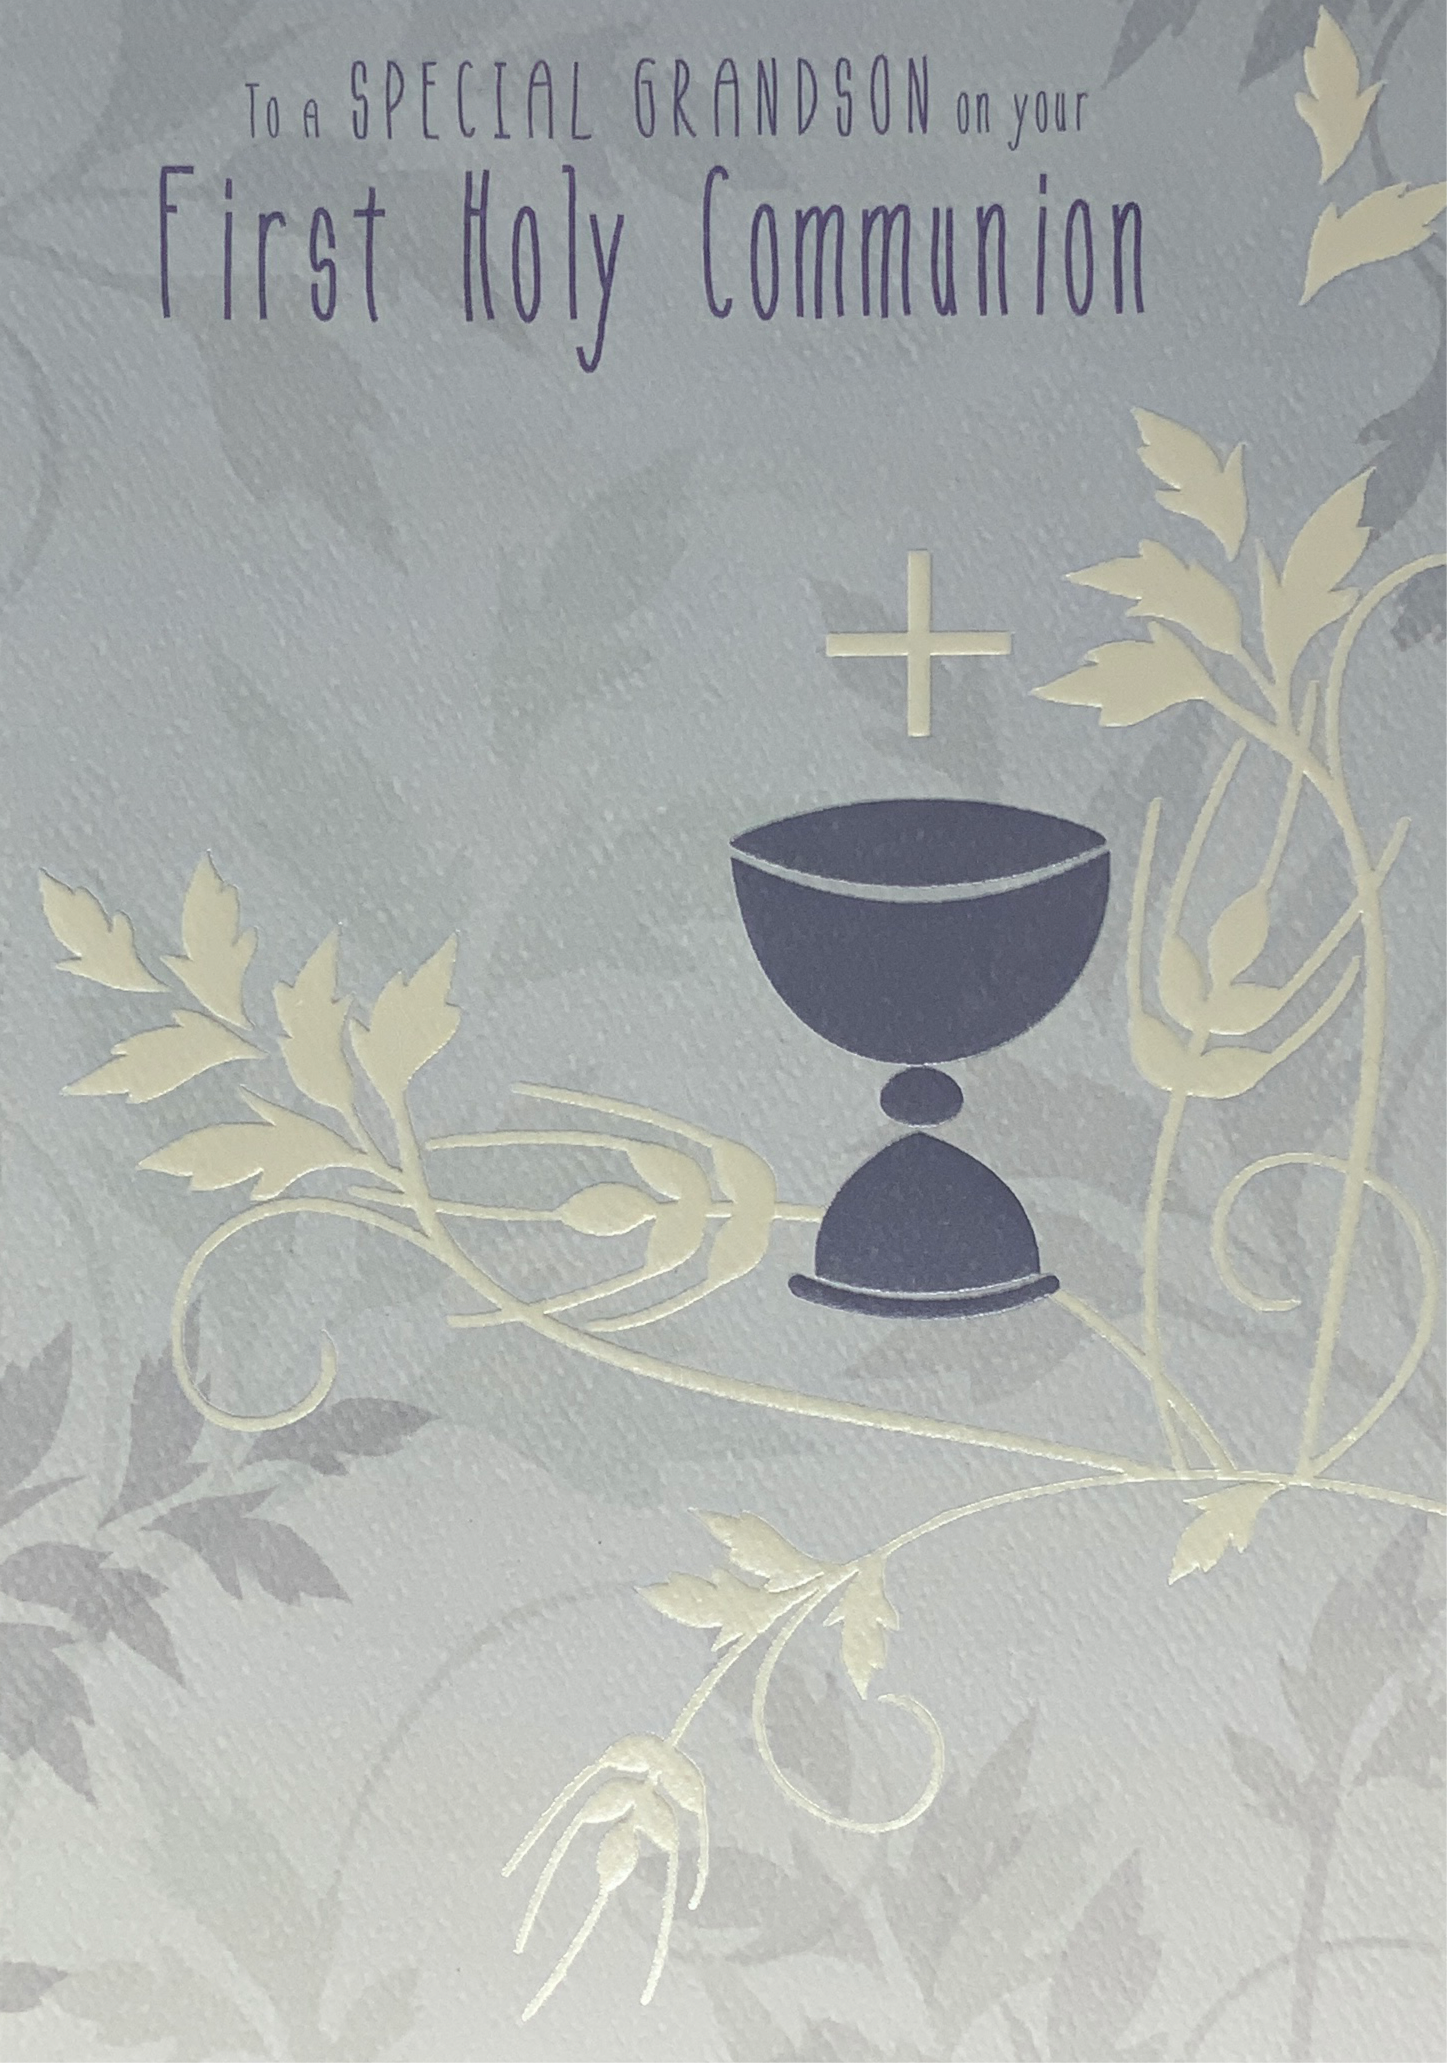 Communion Card - To A Wonderful Grandson